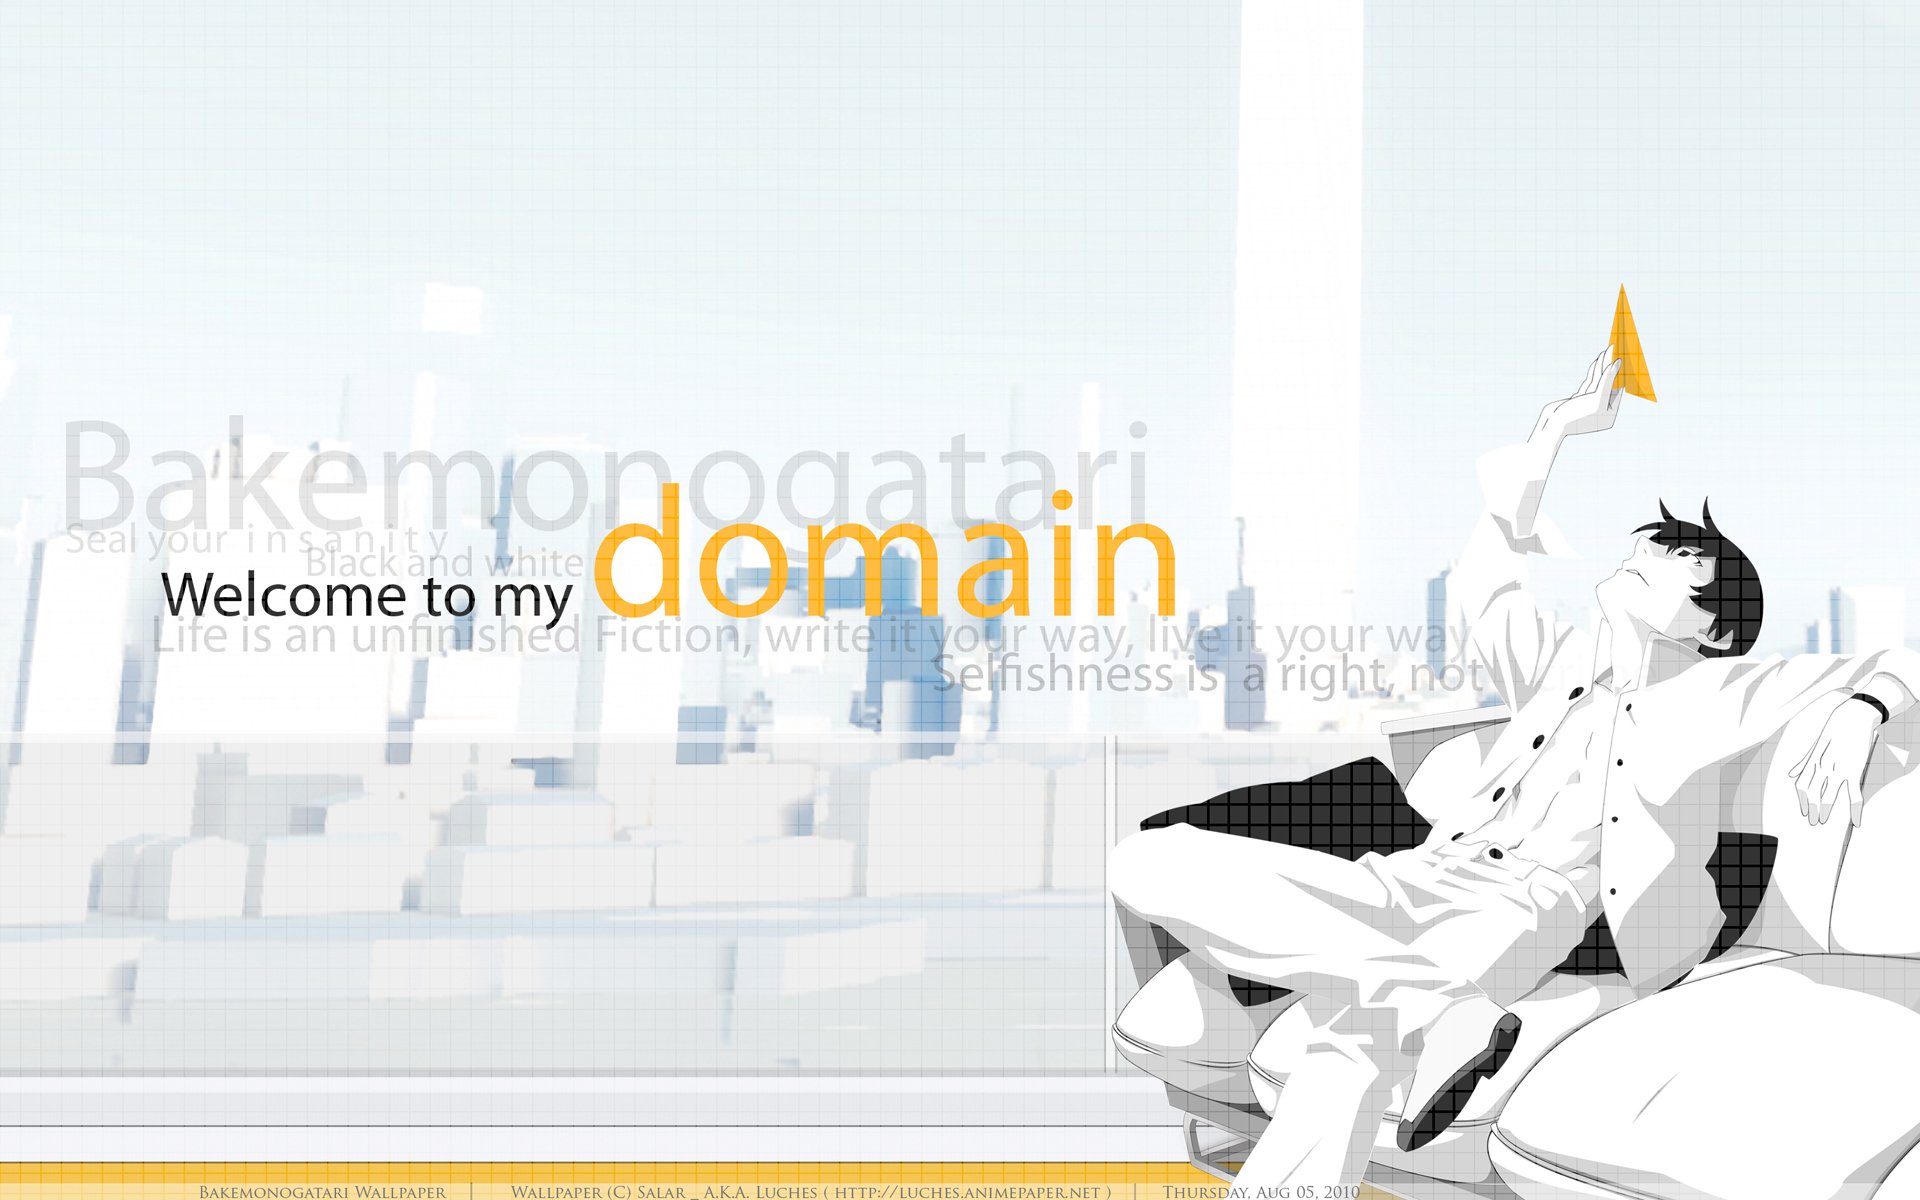 Koyomi Araragi HD Wallpaper Background Image